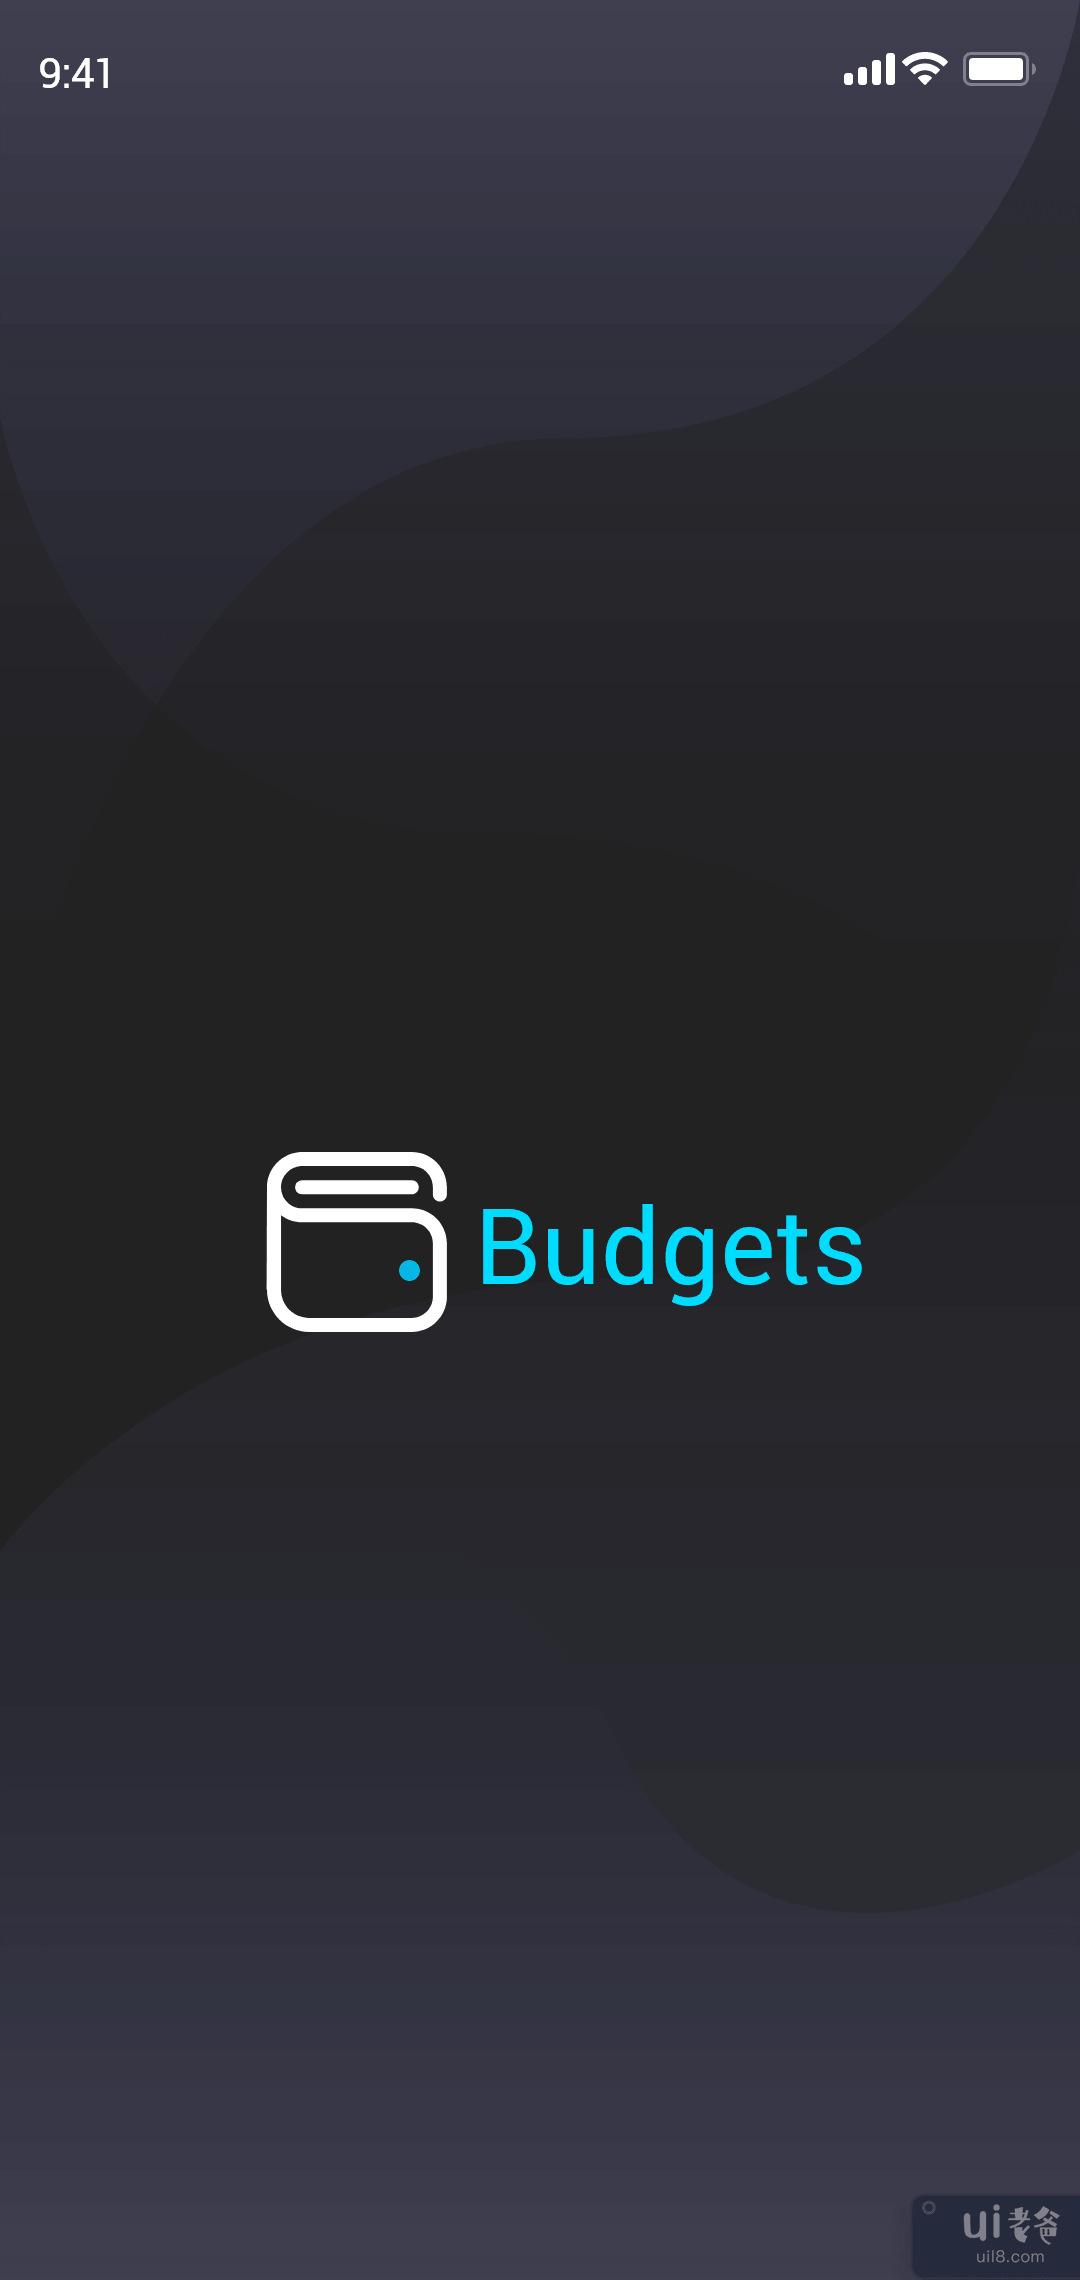 钱包应用挑战 - 预算规划器 iOS UI 套件(Wallet App Challenge - Budget Planner iOS UI Kit)插图6